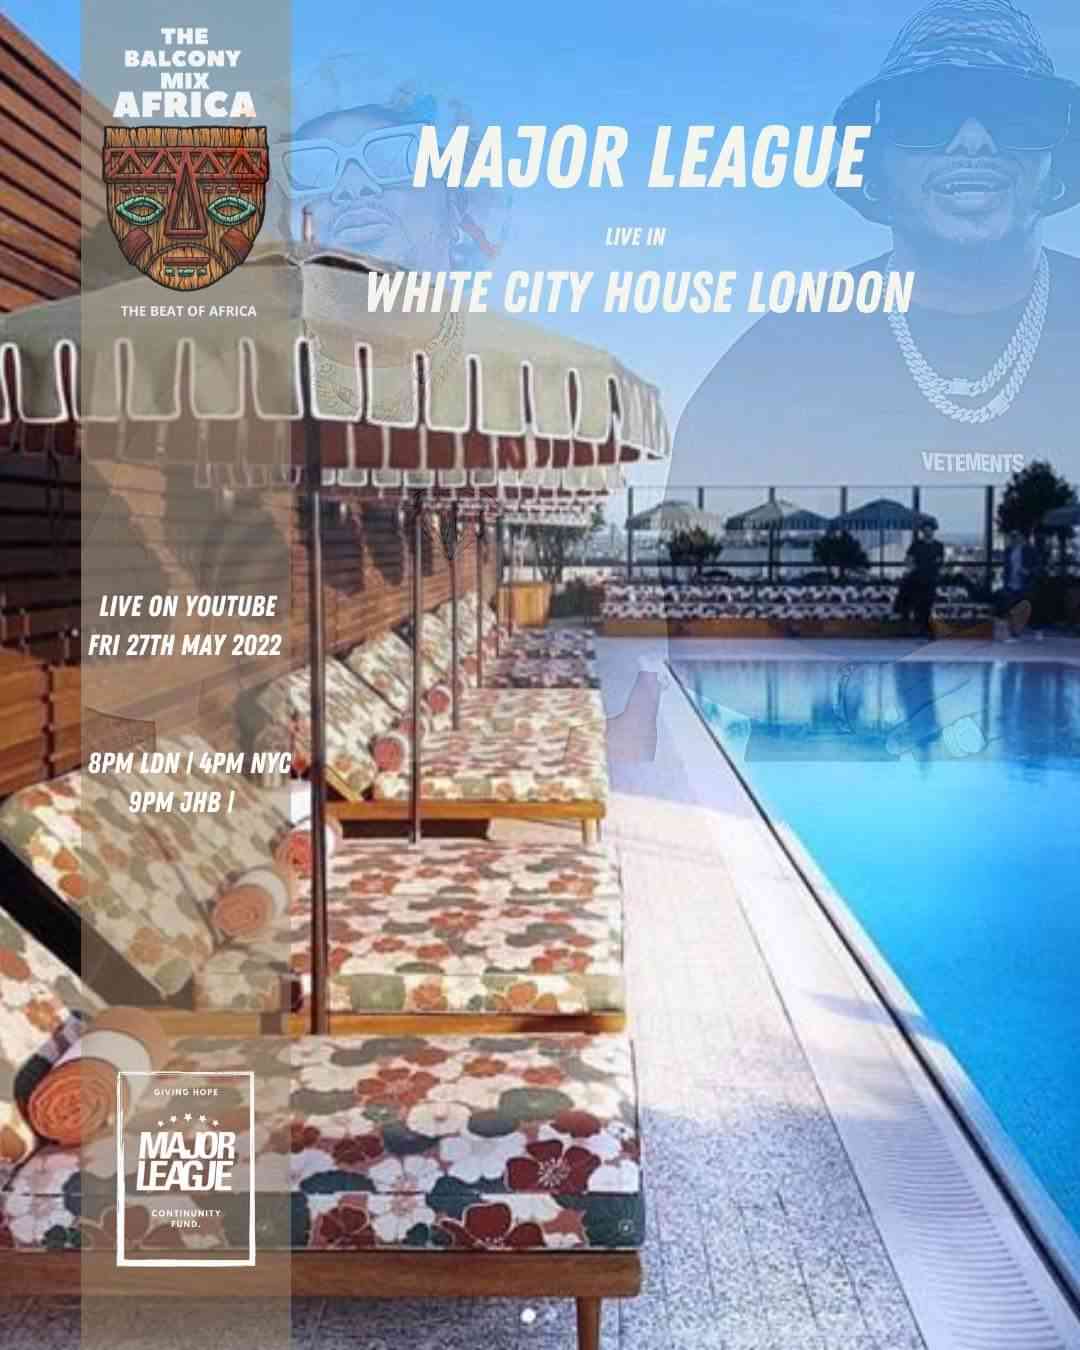 Major League Djz - Amapiano Balcony Mix (S5 EP 1 Live In London) Live at the Soho House In London